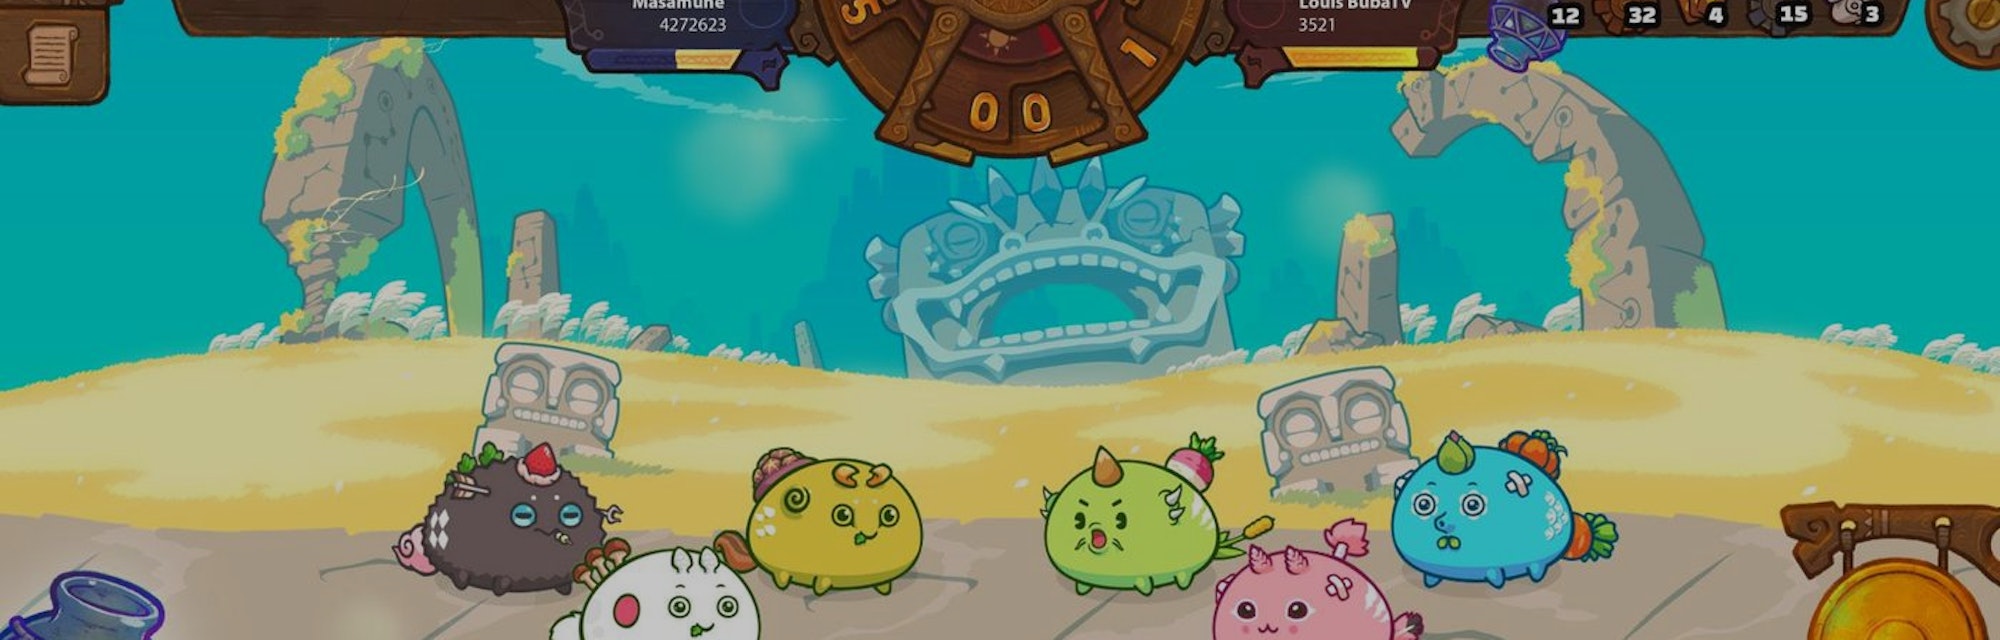 Screengrab of Axie Infinity, a play-to-earn NFT card game where cutesy blob-like creatures battle ea...